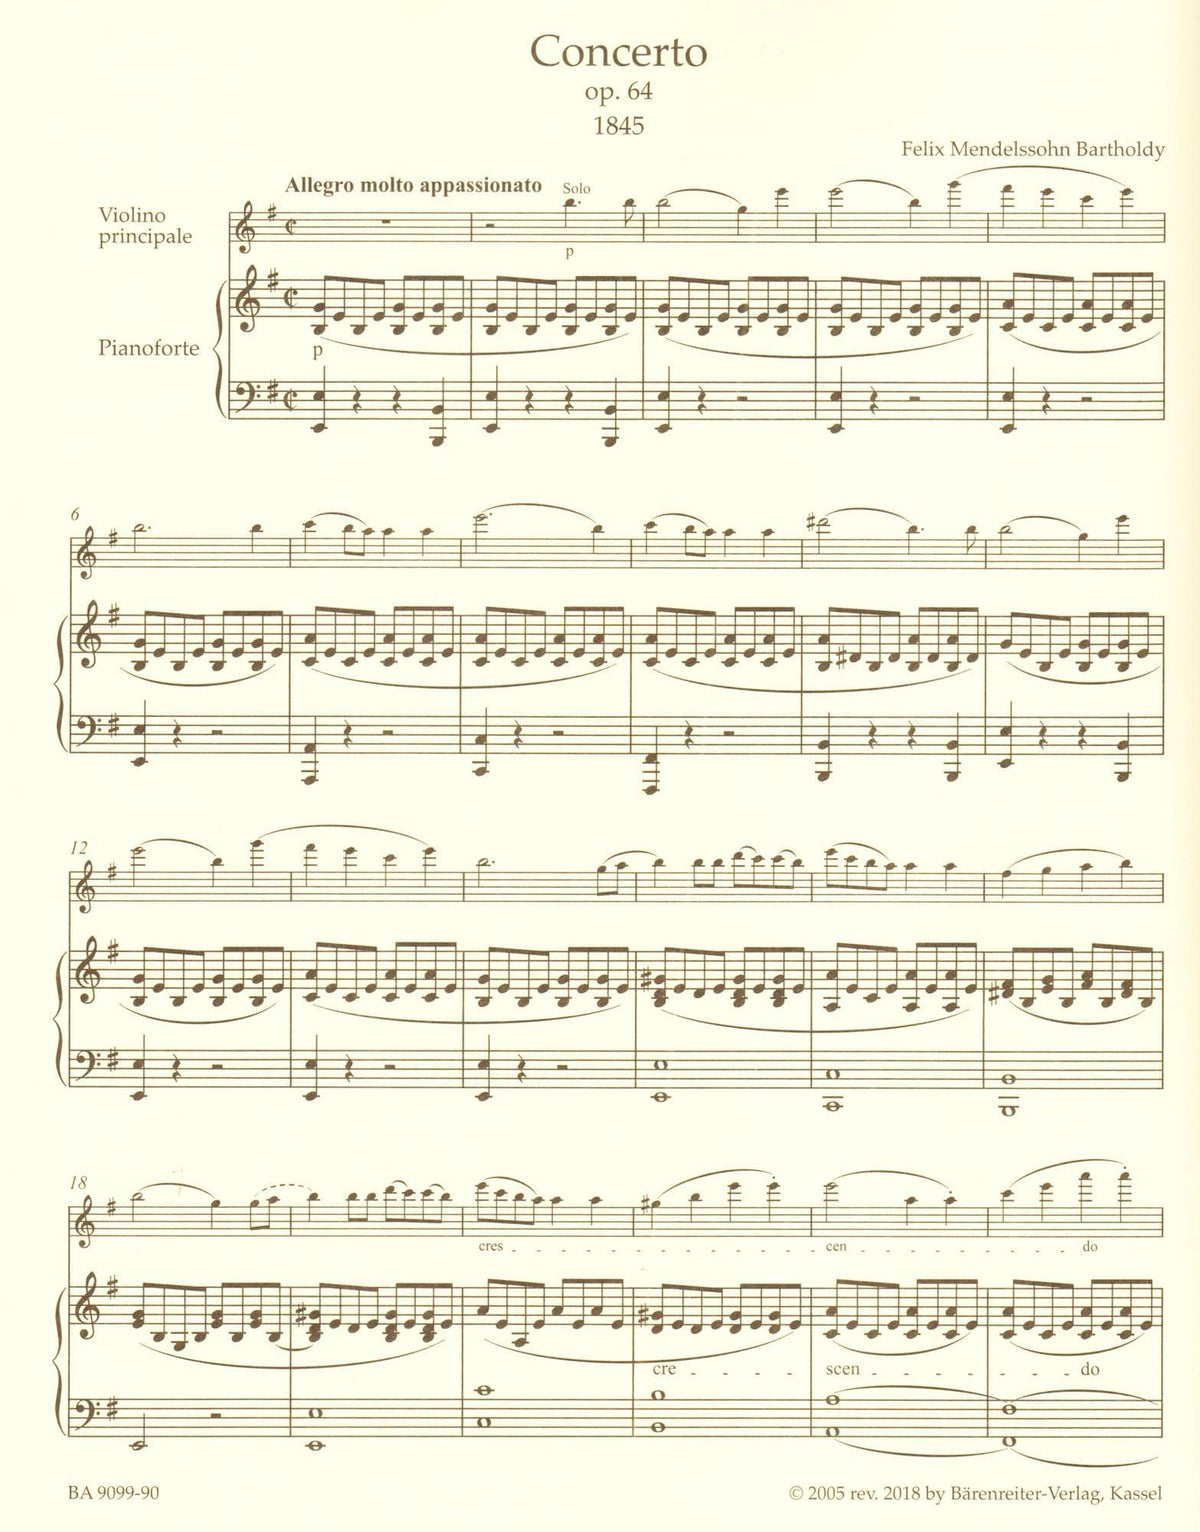 Mendelssohn, Felix - Concerto in E minor, Op 64 - Violin and Piano - Barenreiter Urtext